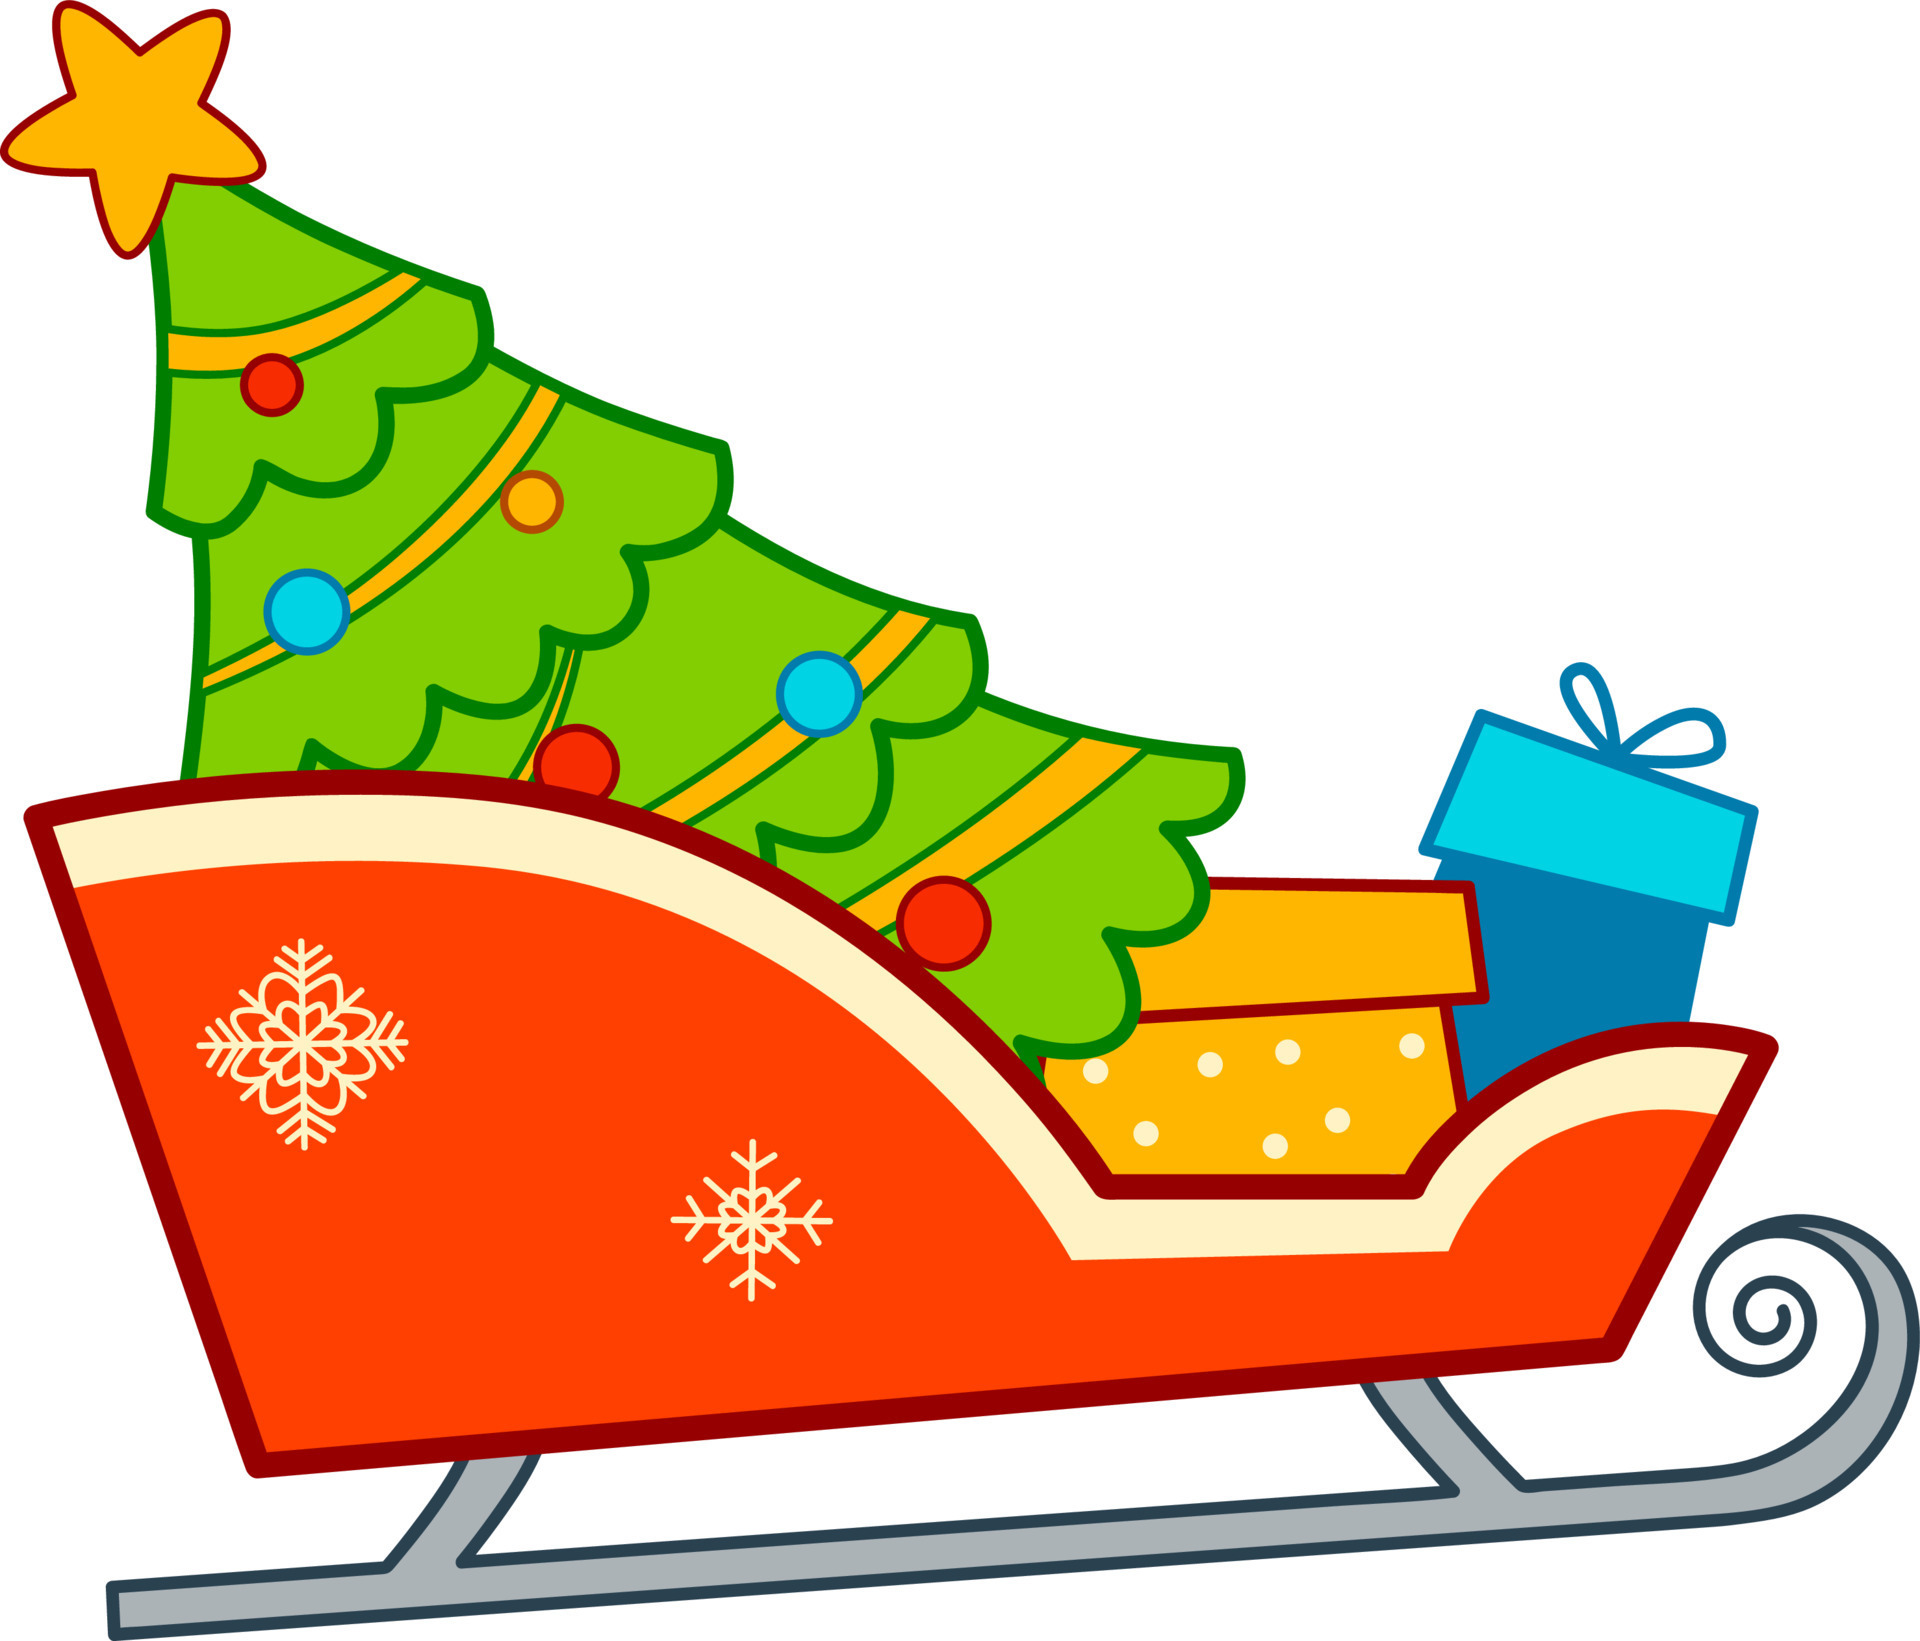 Christmas cartoons clip art. Christmas sled vector illustration 8720663 ...